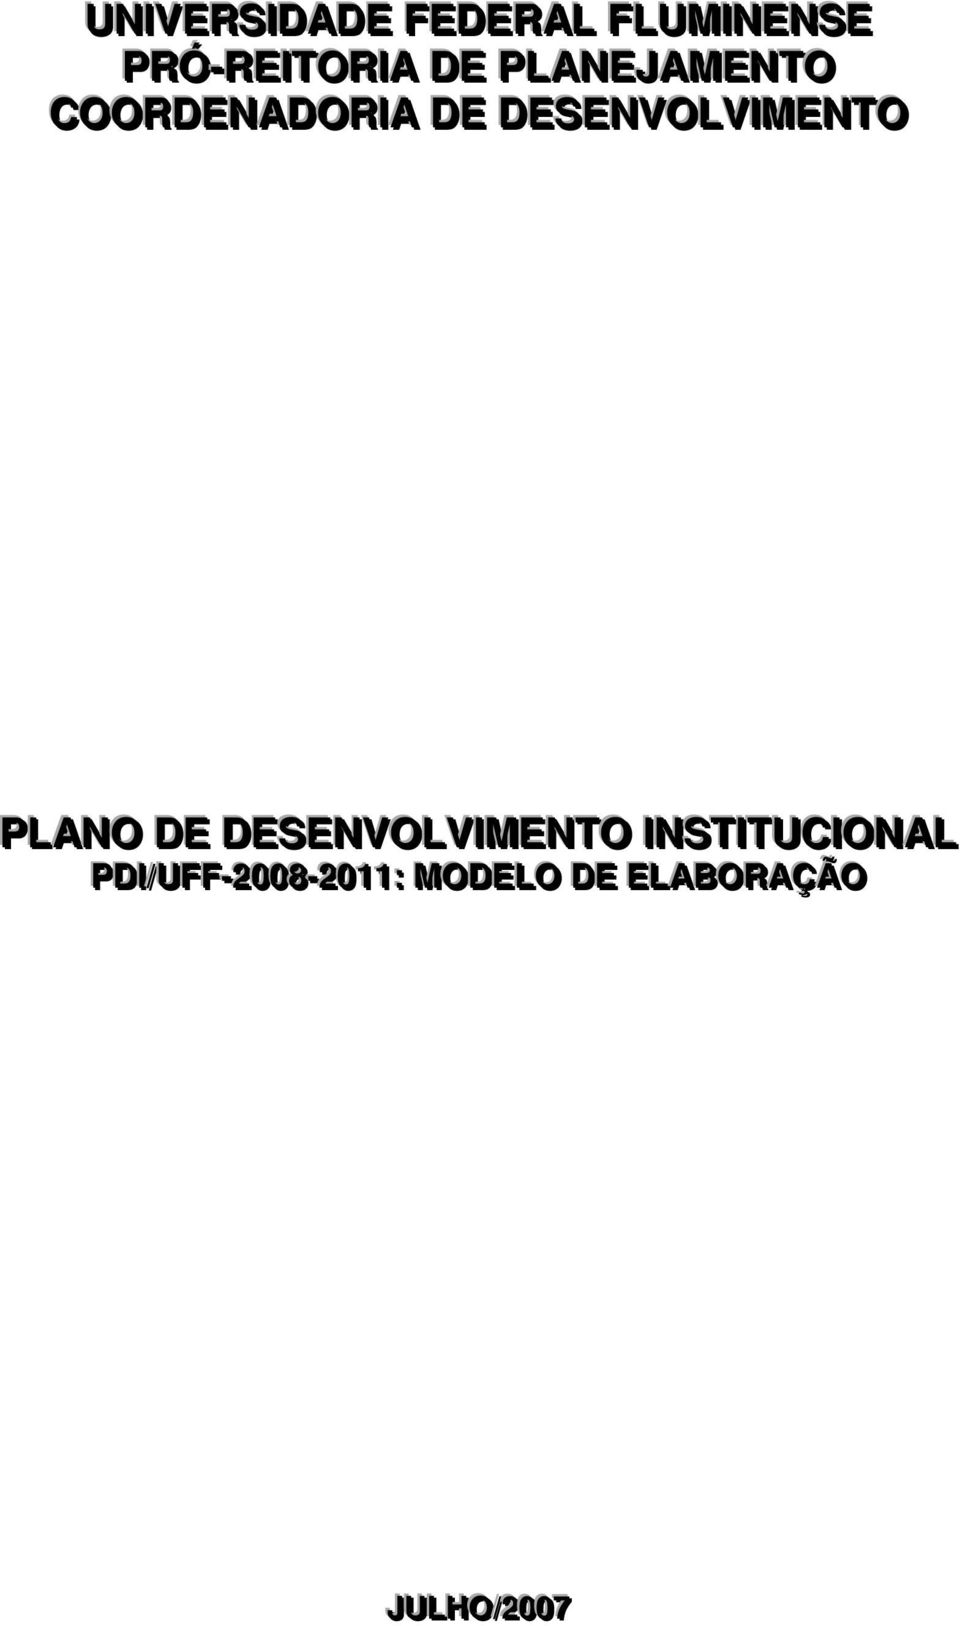 PLANO DE DESENVOLVIIMENTO IINSTIITUCIIONAL PDII/